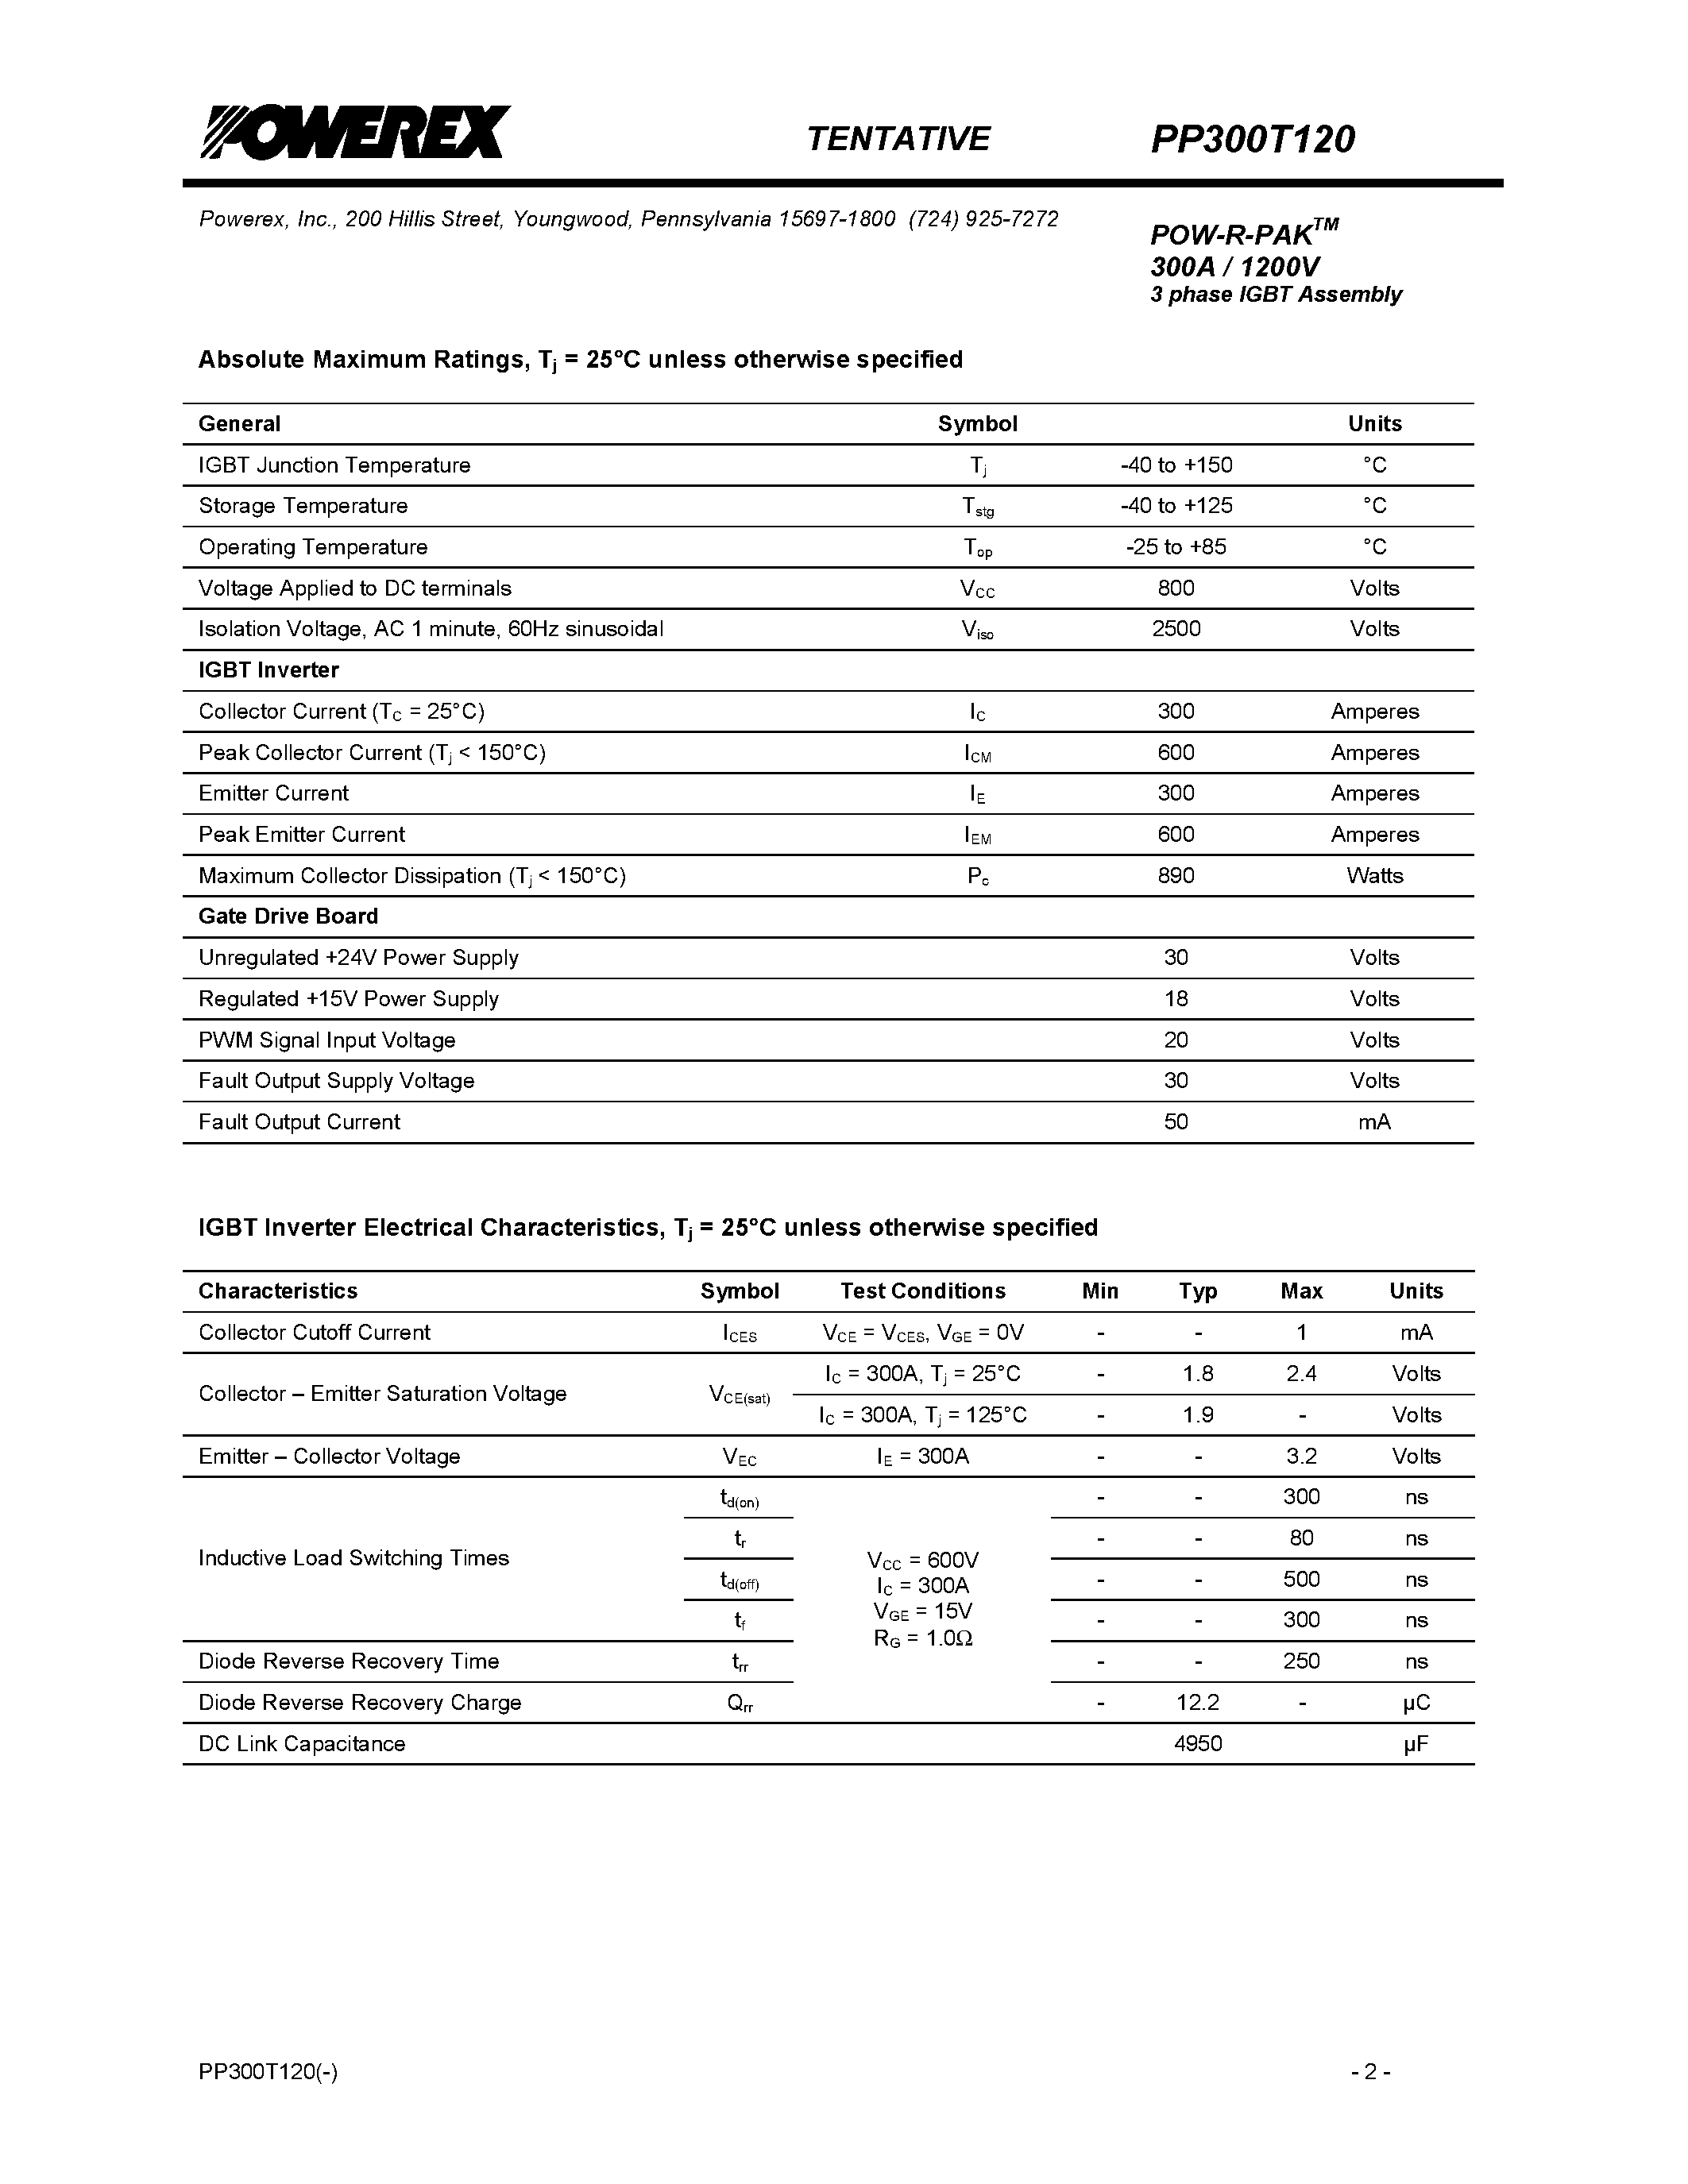 Datasheet PP300T120 - POW-R-PAK 300A / 1200V 3 phase IGBT Assembly page 2